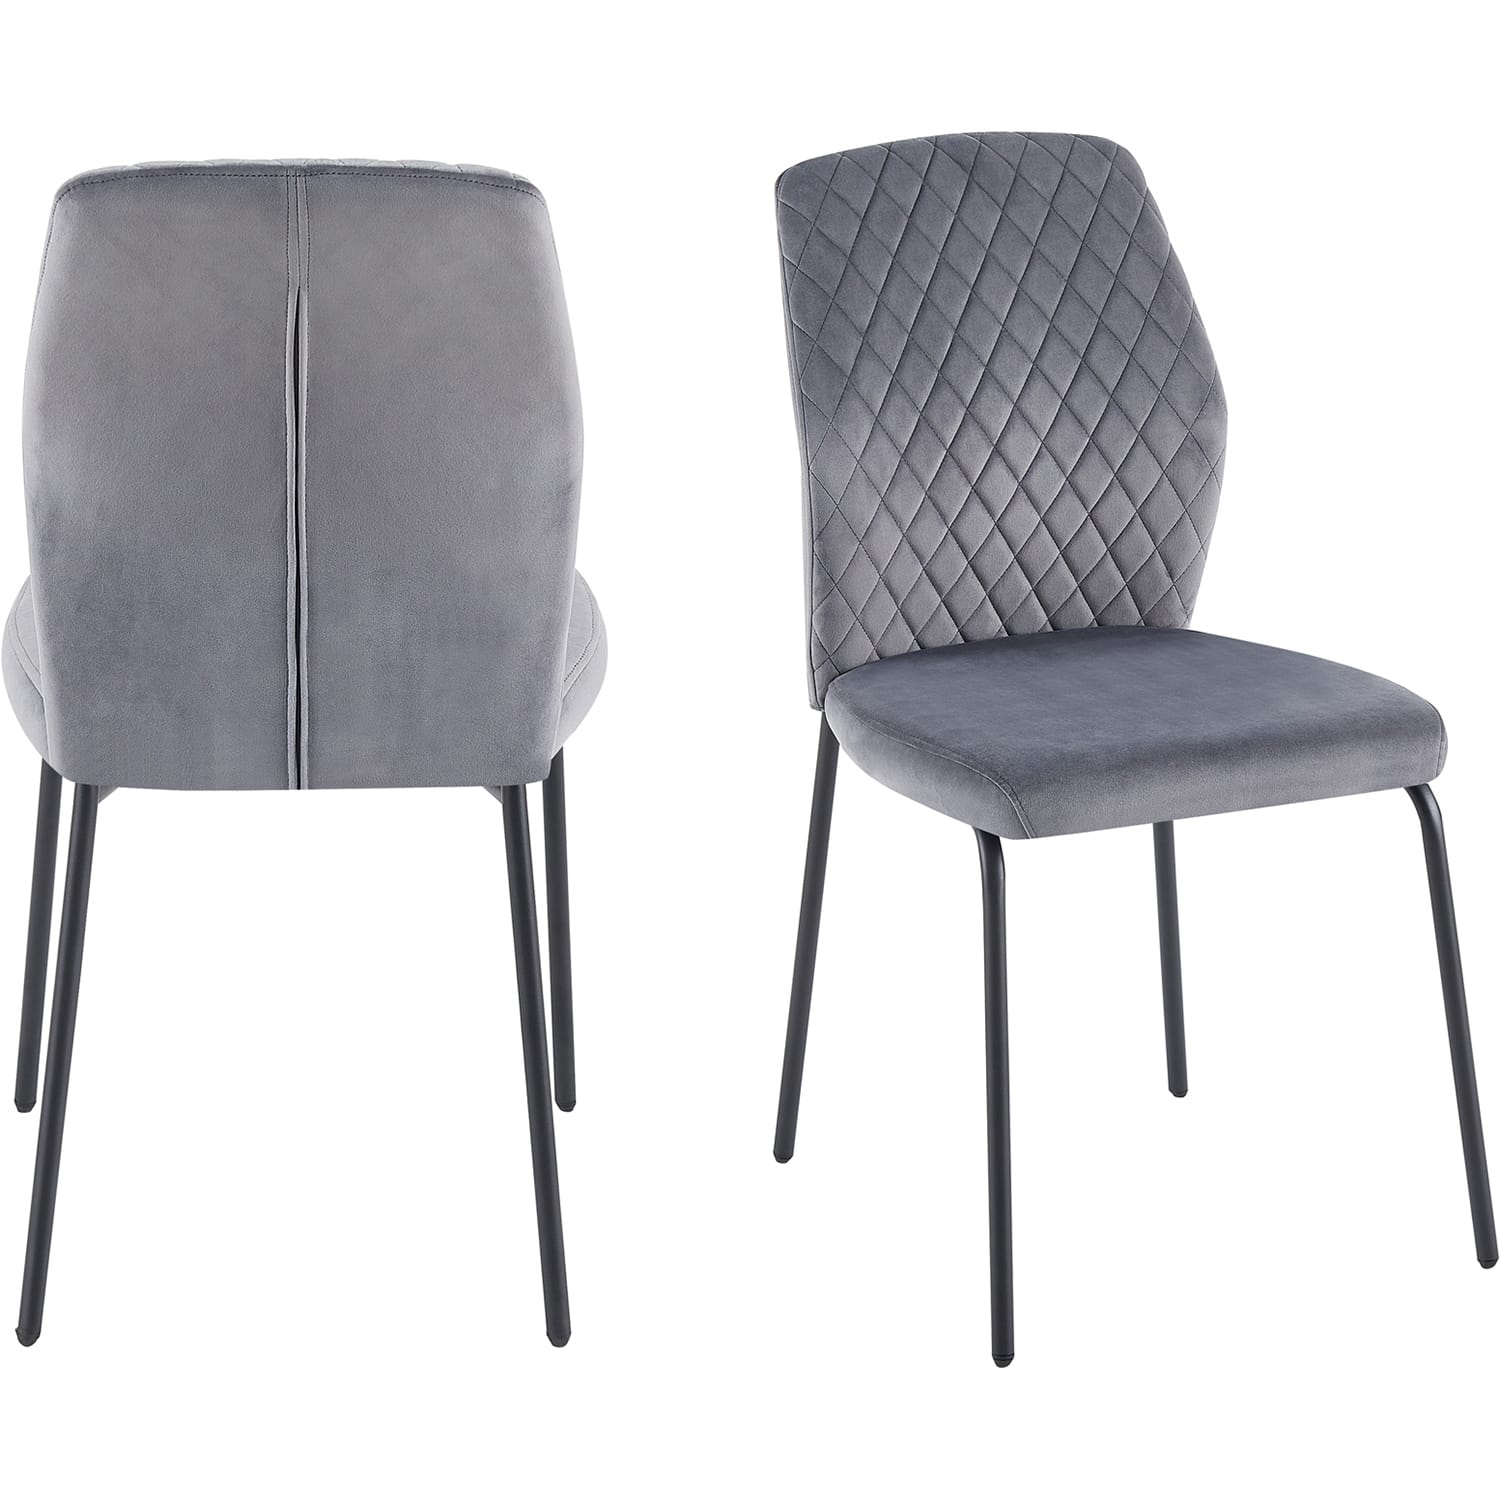 Metall | Snoplix Möbel grau | Samt Stühle | mutoni Polsterstühle Esszimmerstuhl | (2er-Set) möbel